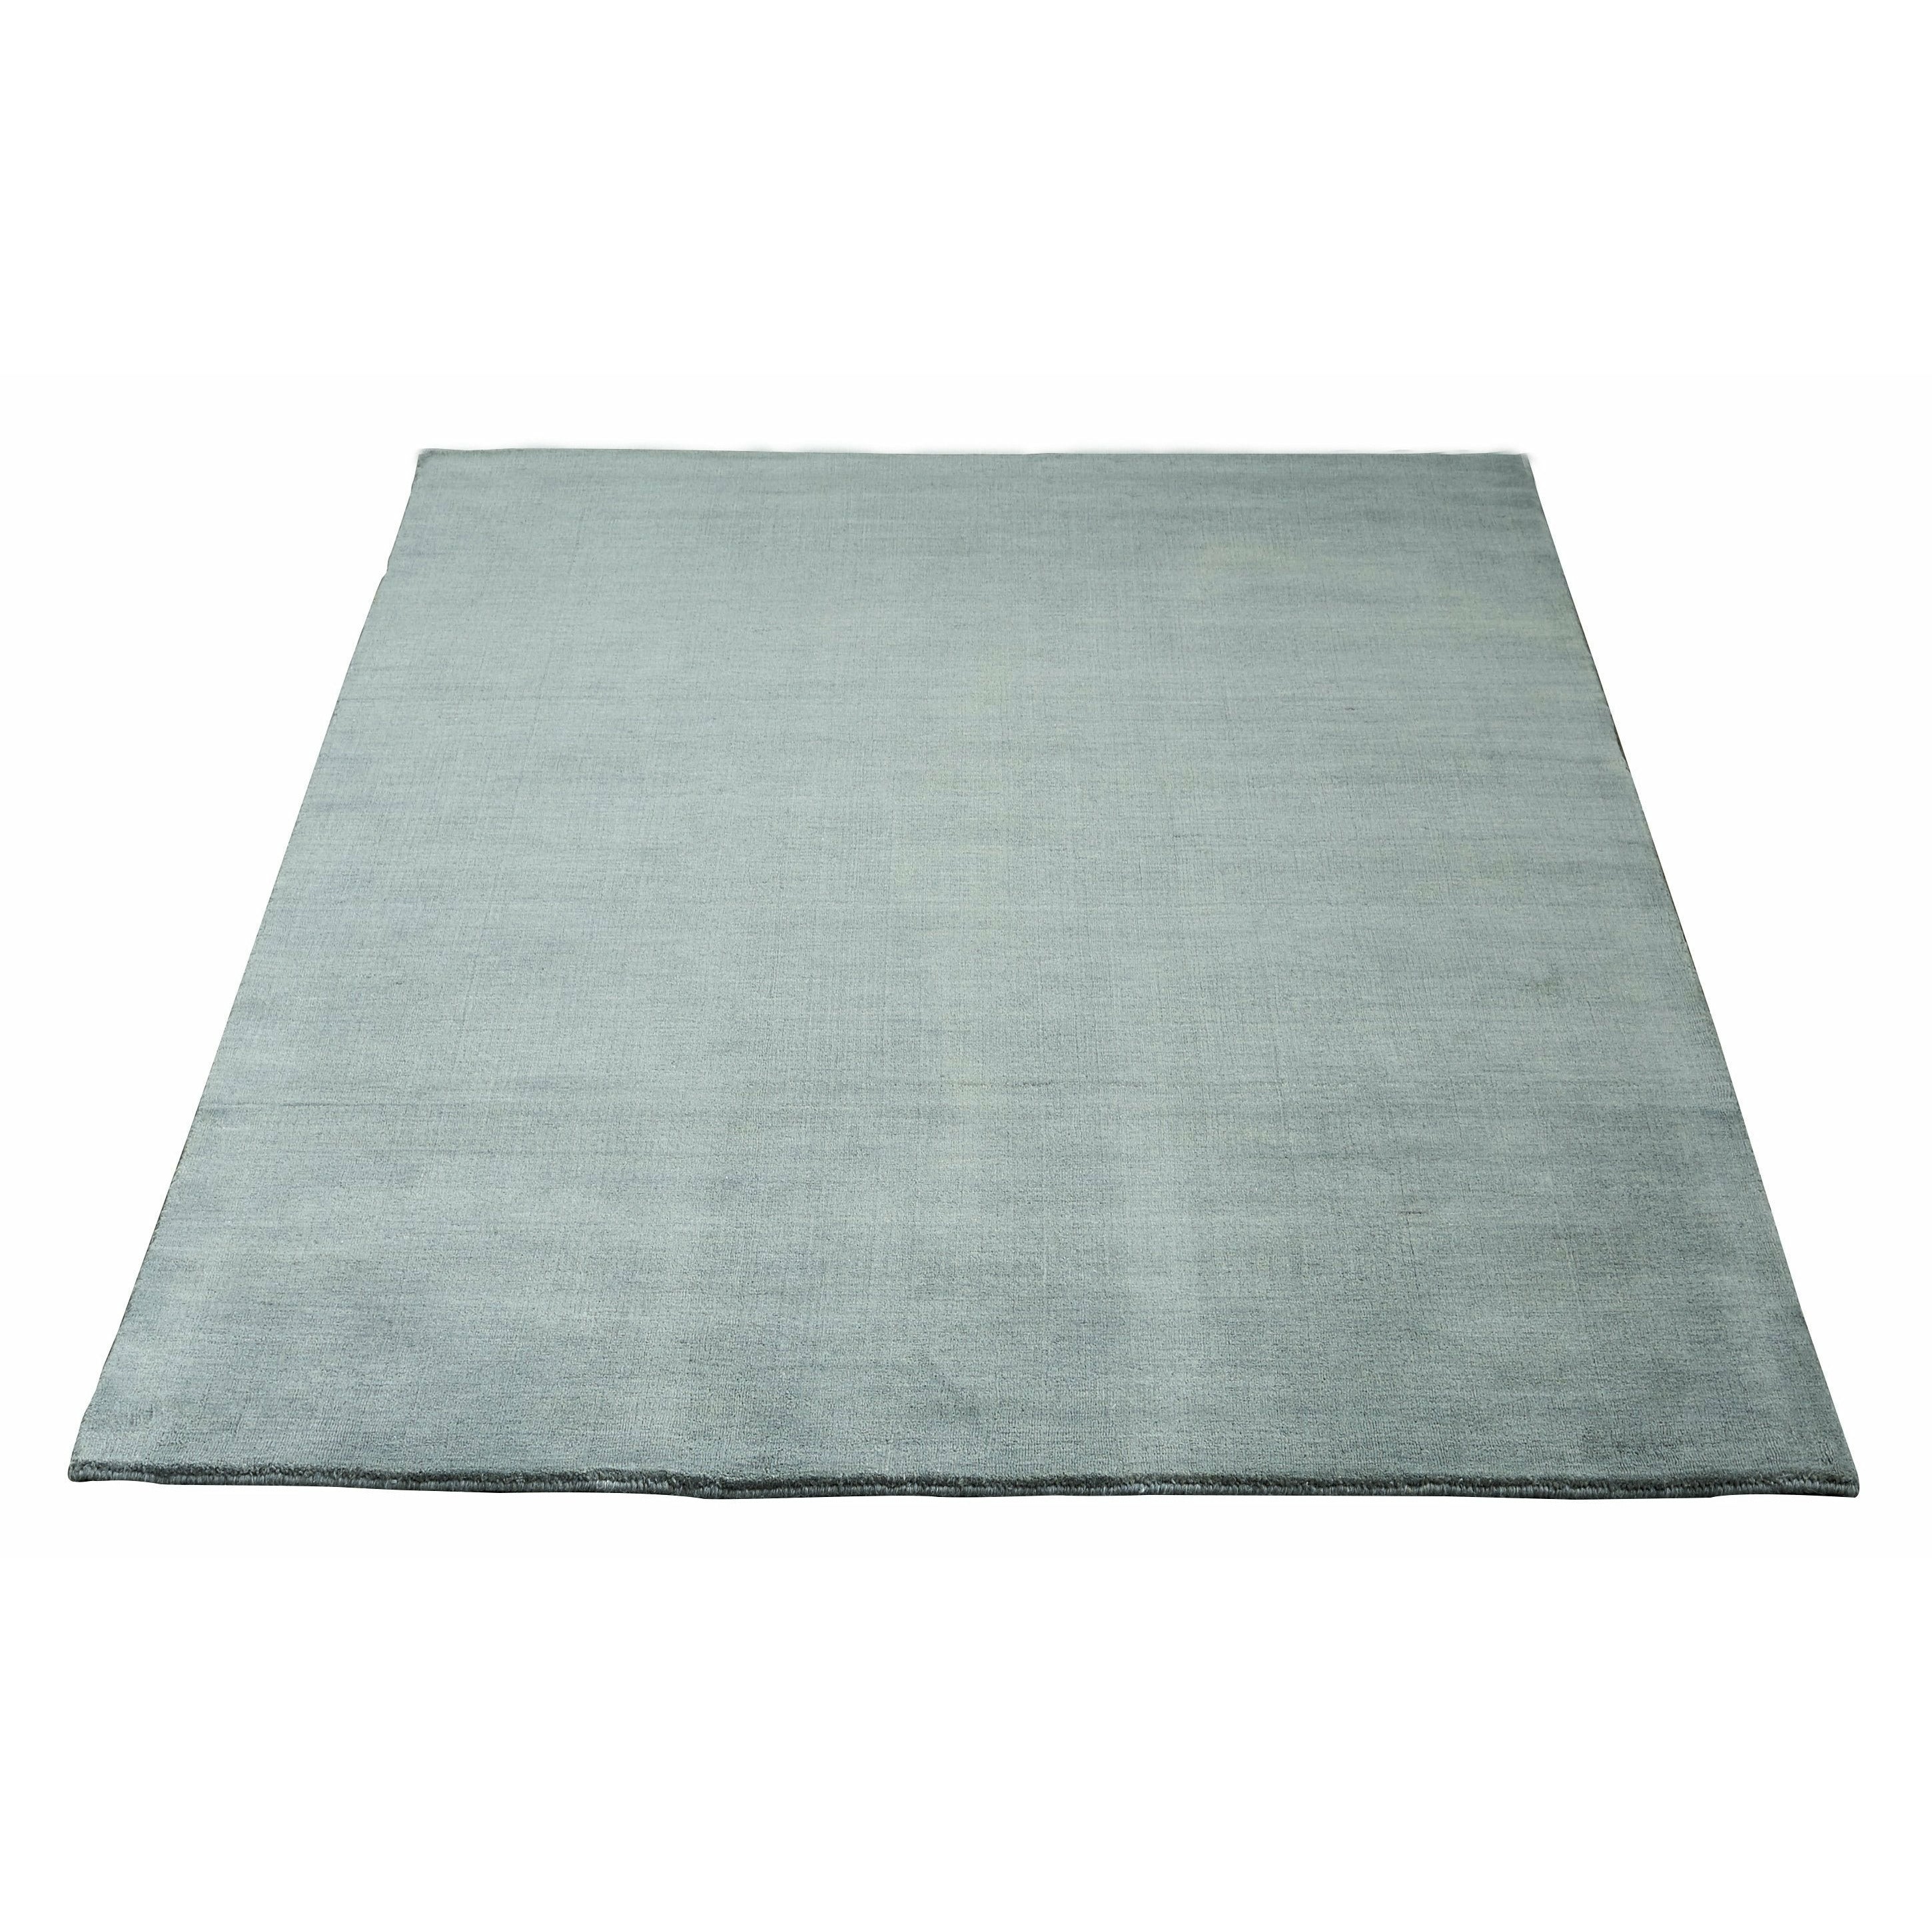 Massimo Earth Tapper verte grijs, 250x300 cm